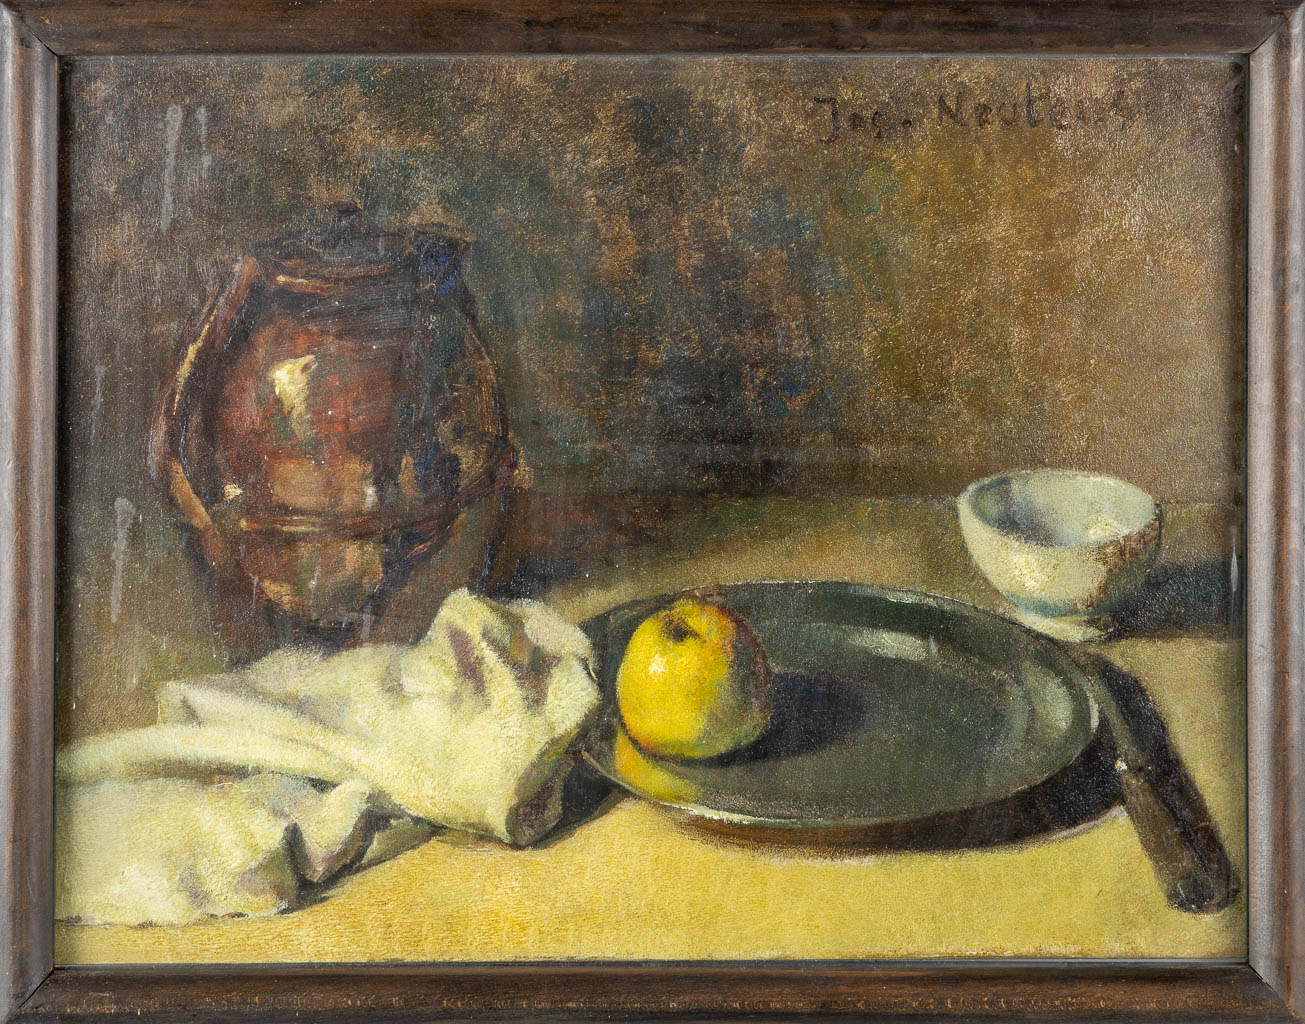  Joseph NEUTENS (1874-1965) 'Still life with an apple' 